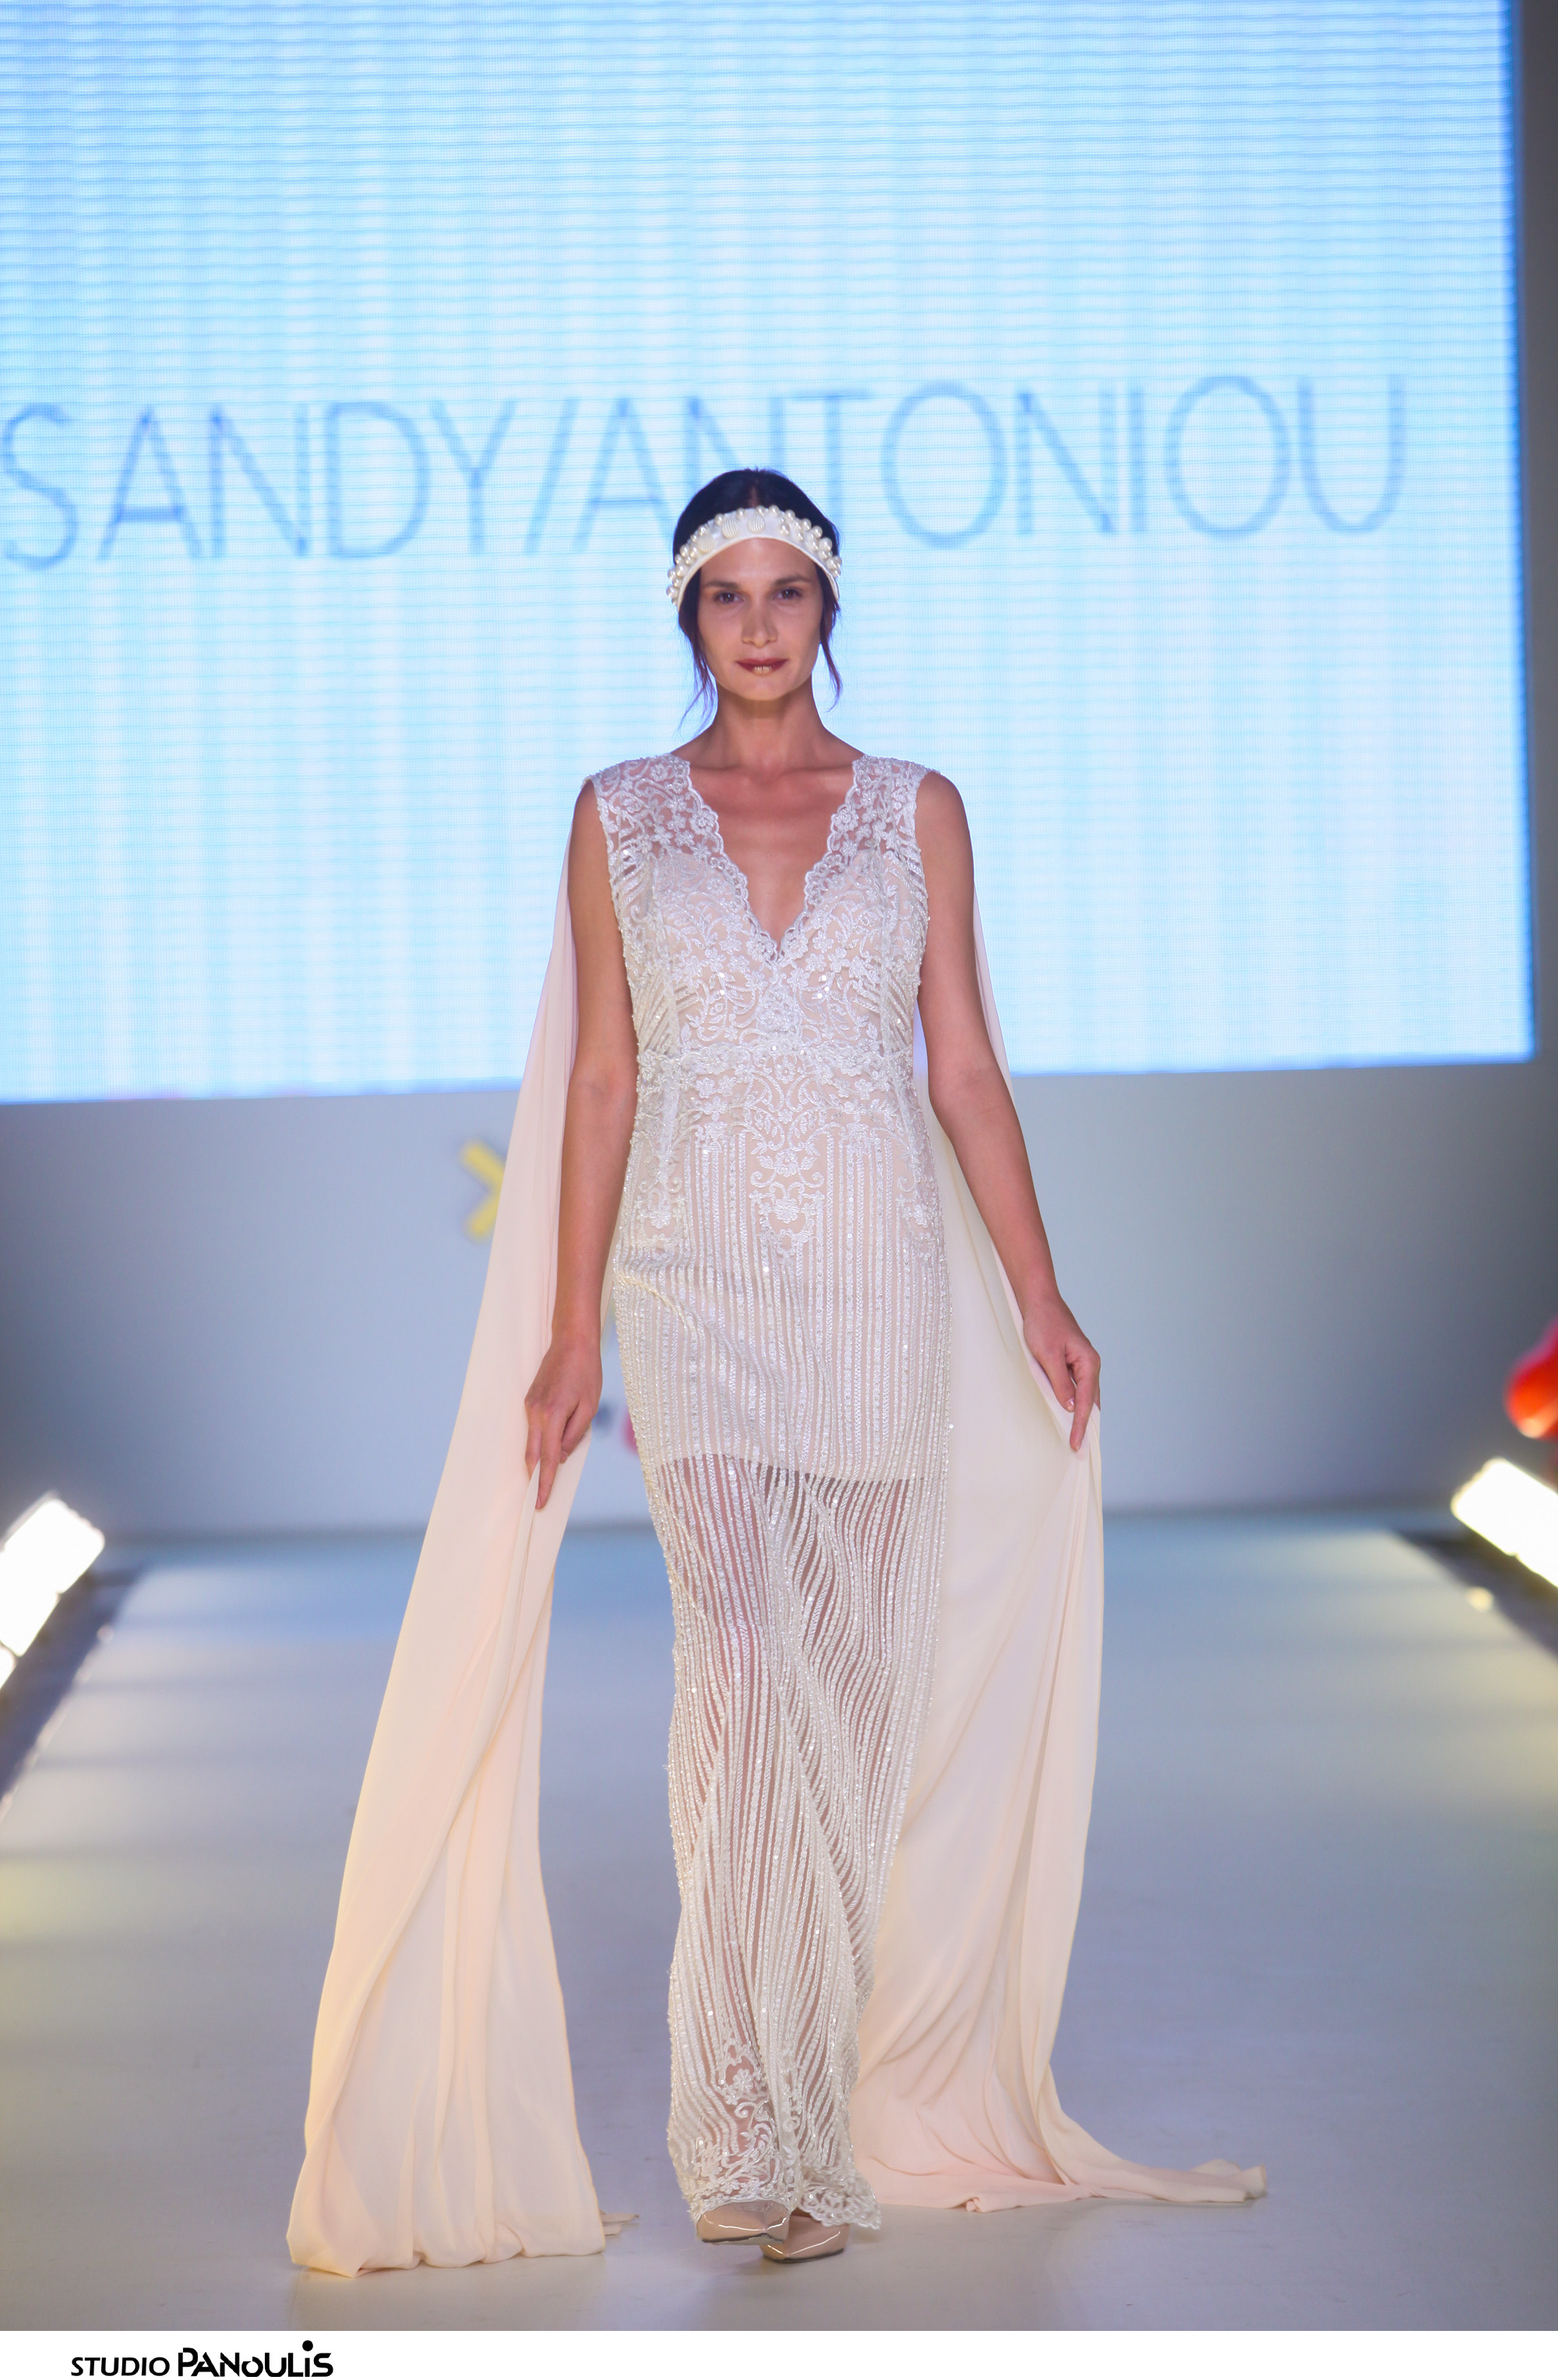  SANDY ANTONIOU/Catwalk 